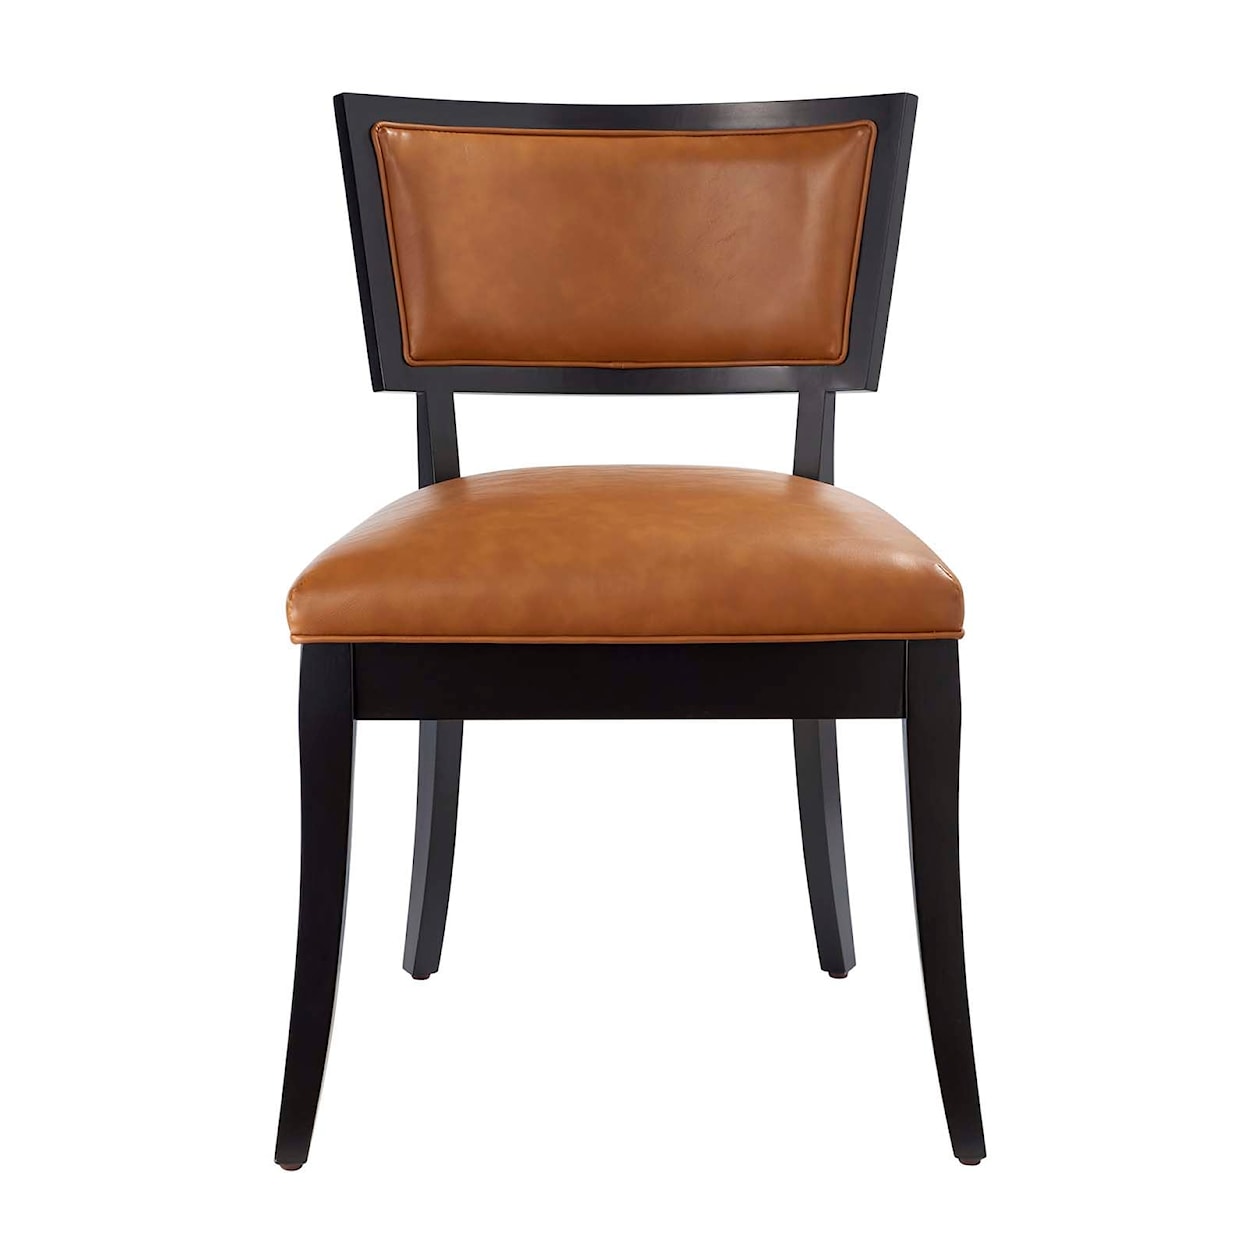 Modway Pristine Pristine Dining Chairs - Set of 2